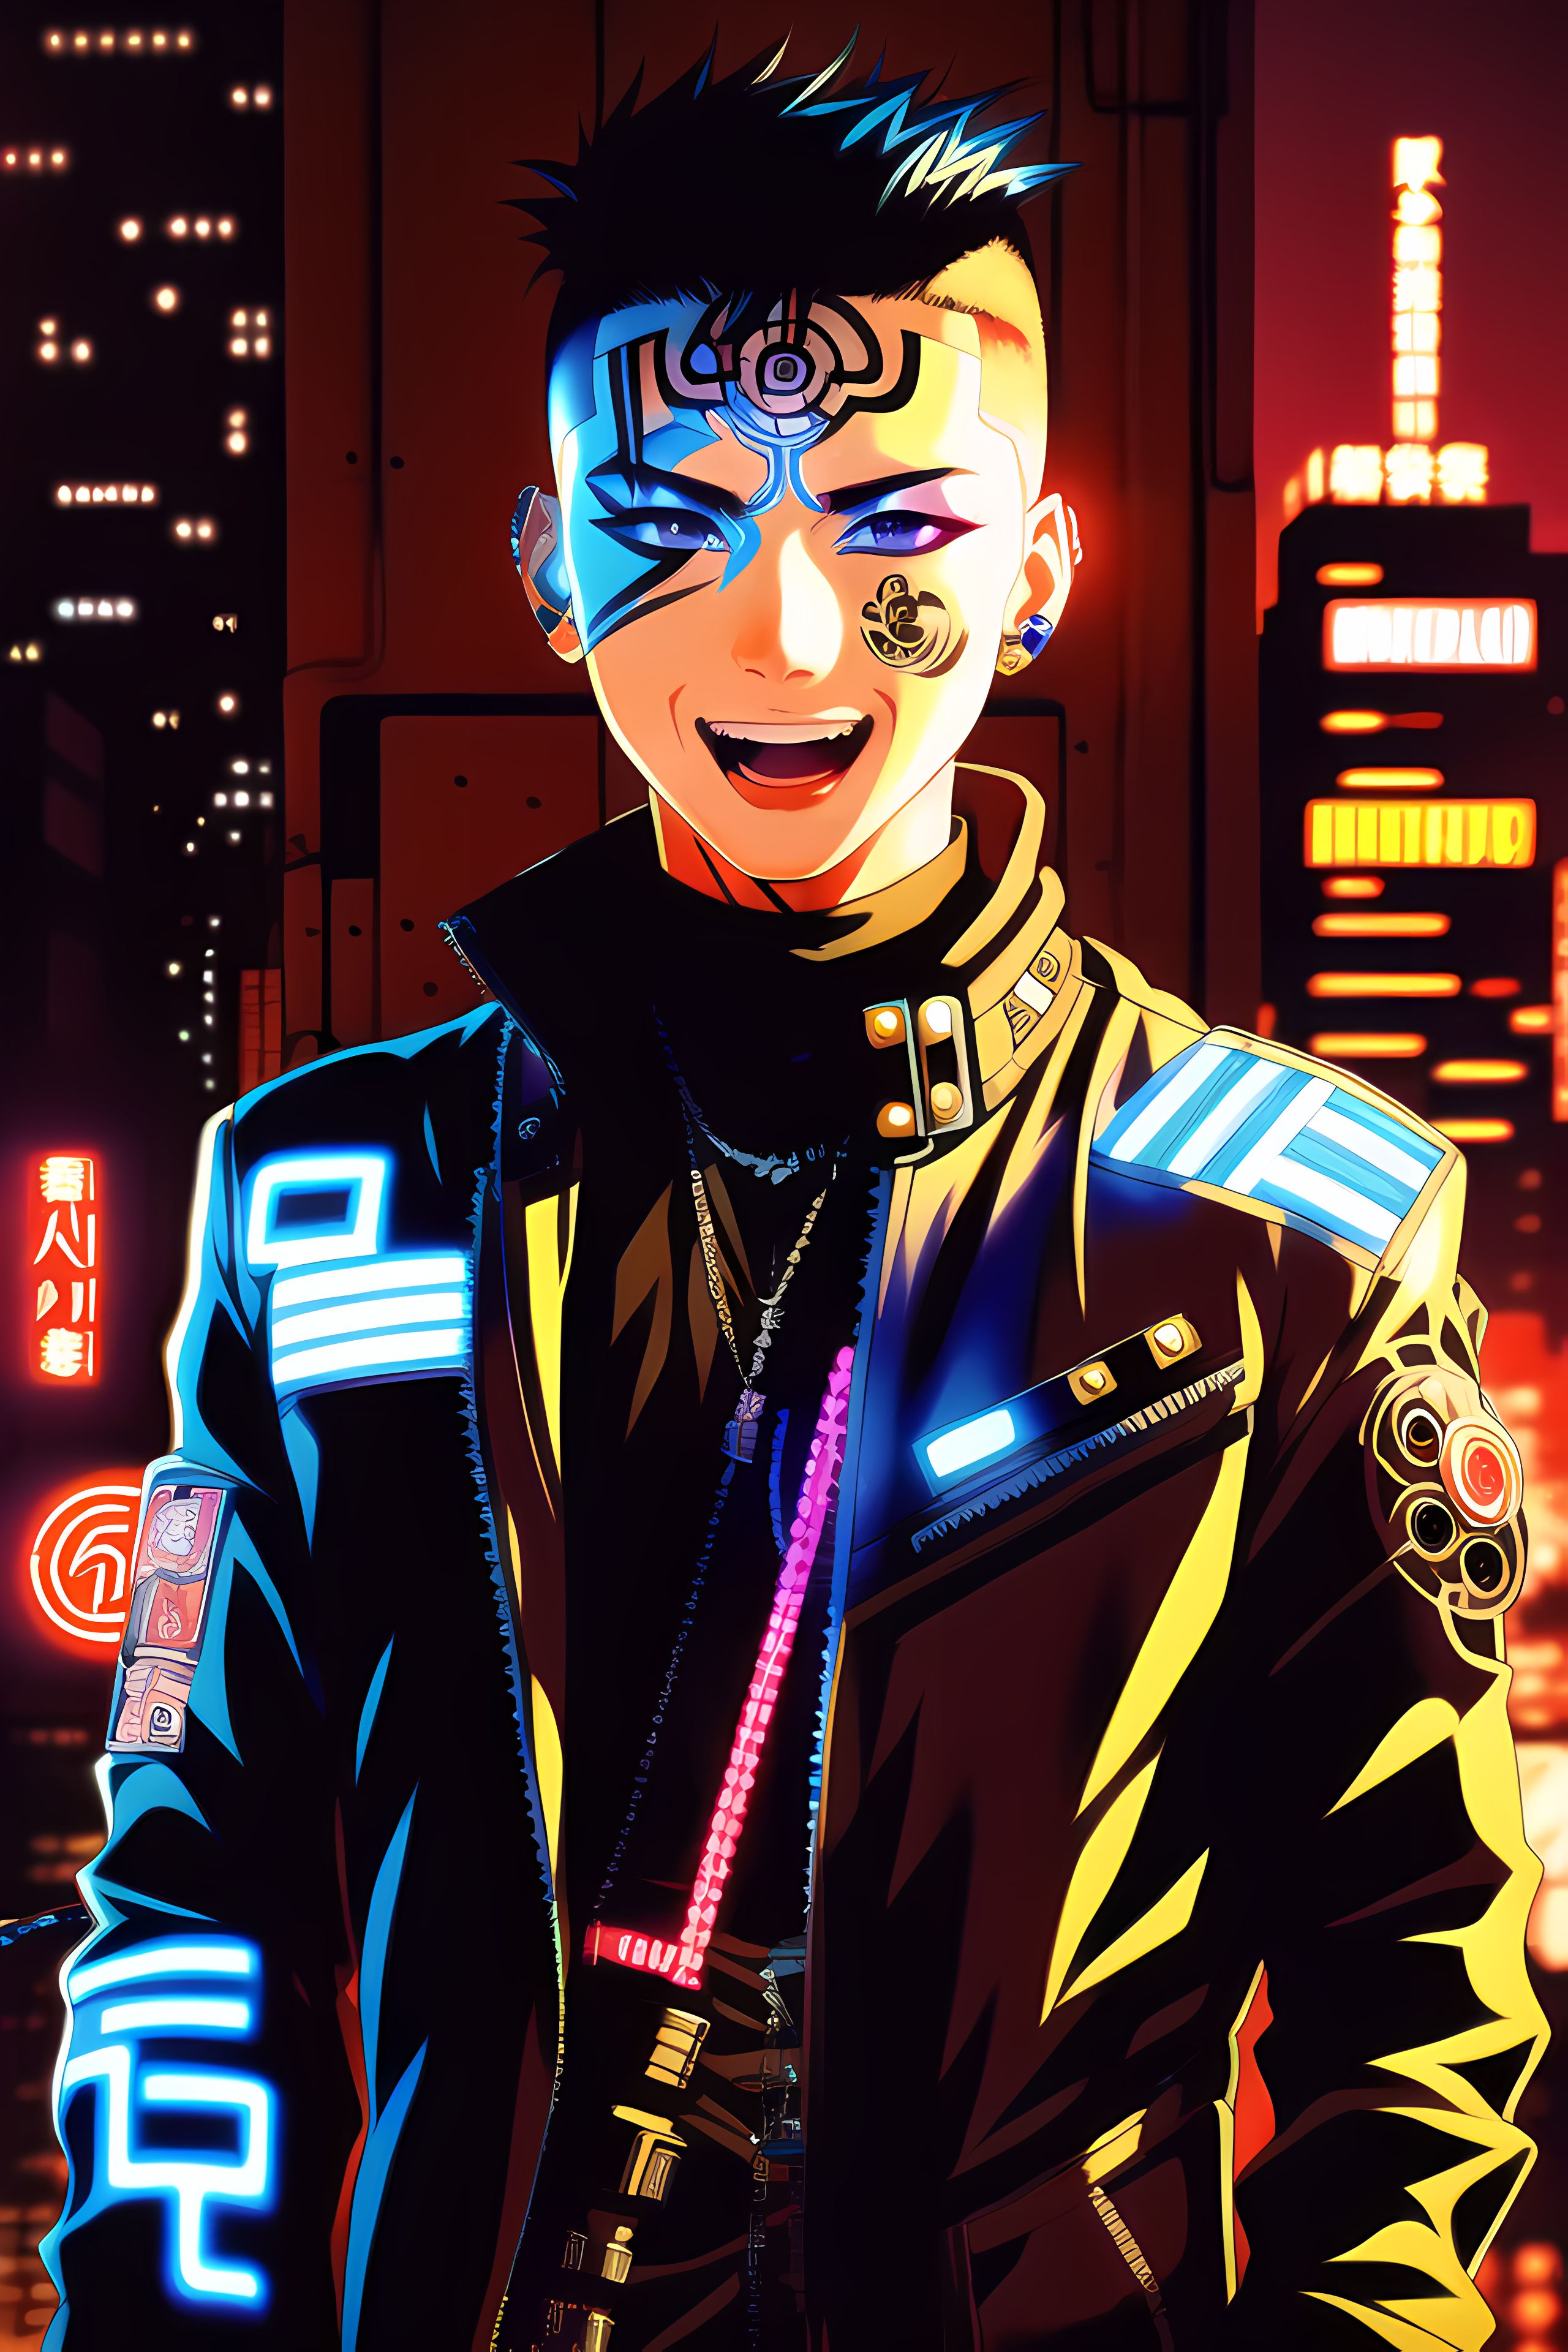 Cyberpunk Guy by AceRanger17 on DeviantArt